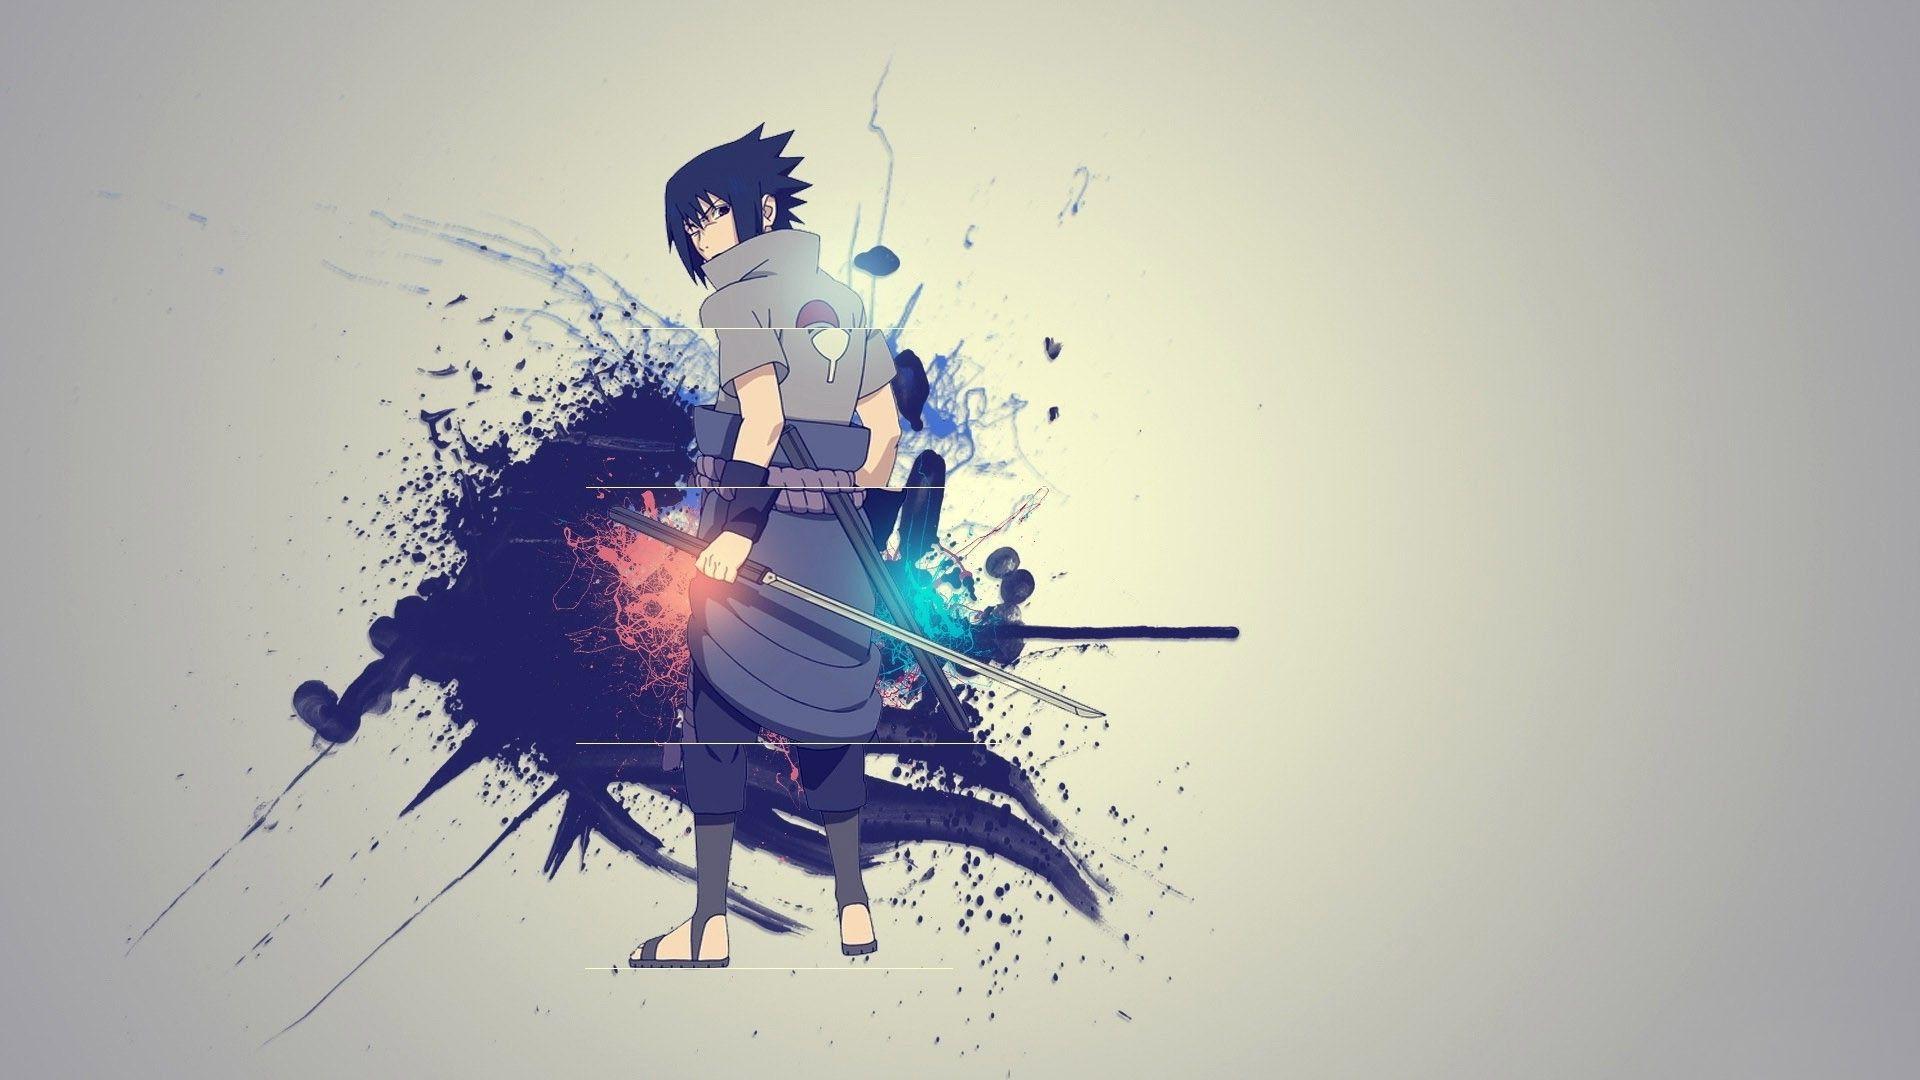 Wallpaper, drawing, illustration, blue, graphic design, Naruto